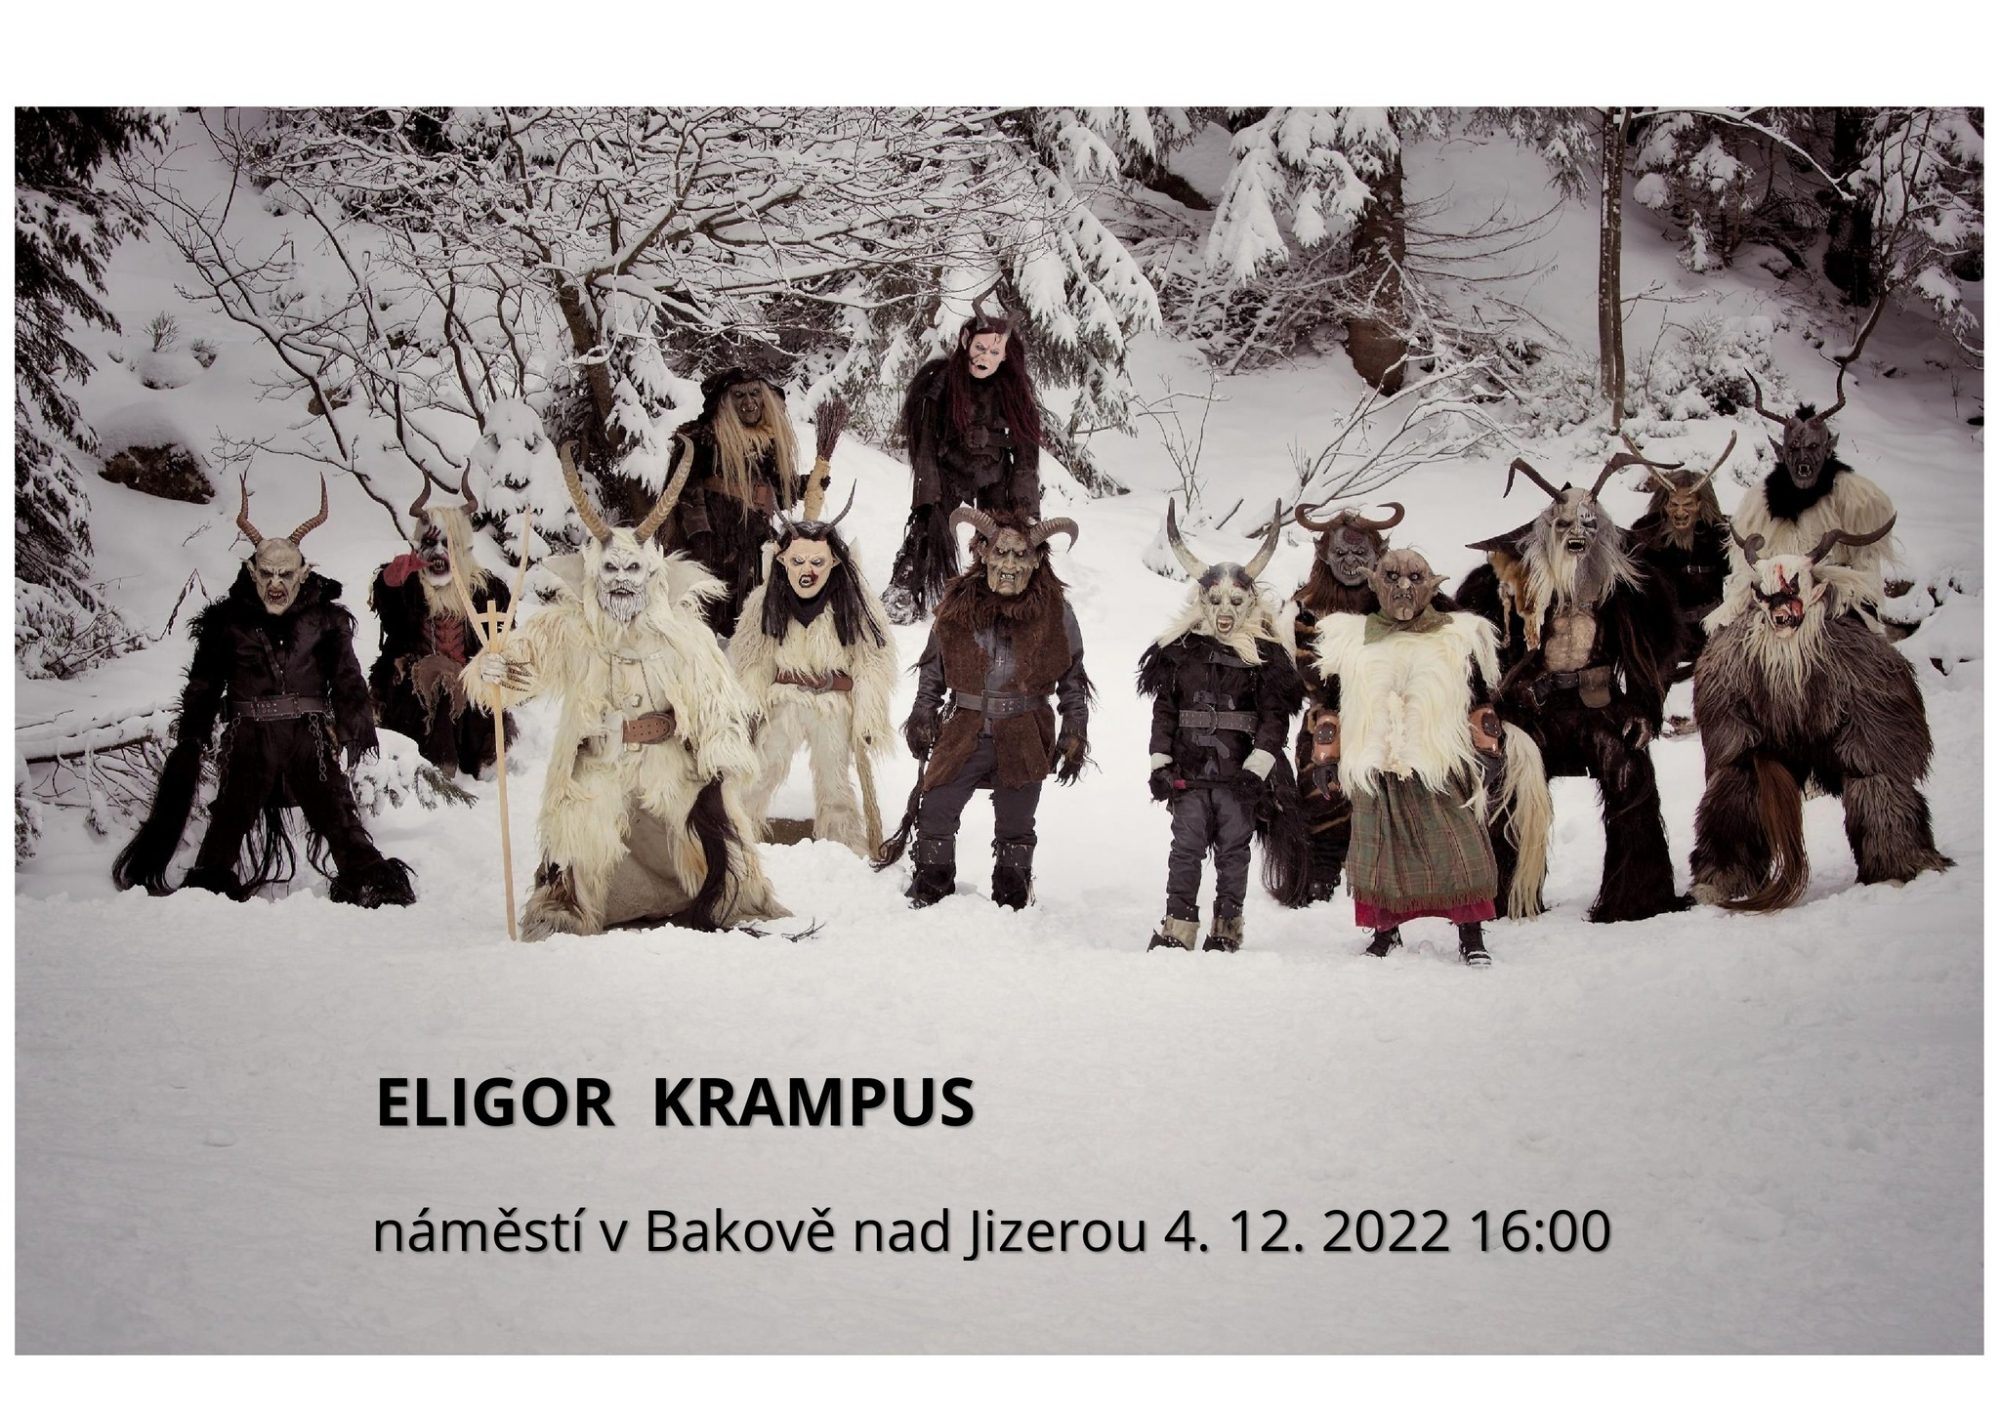 Eligor Krampus